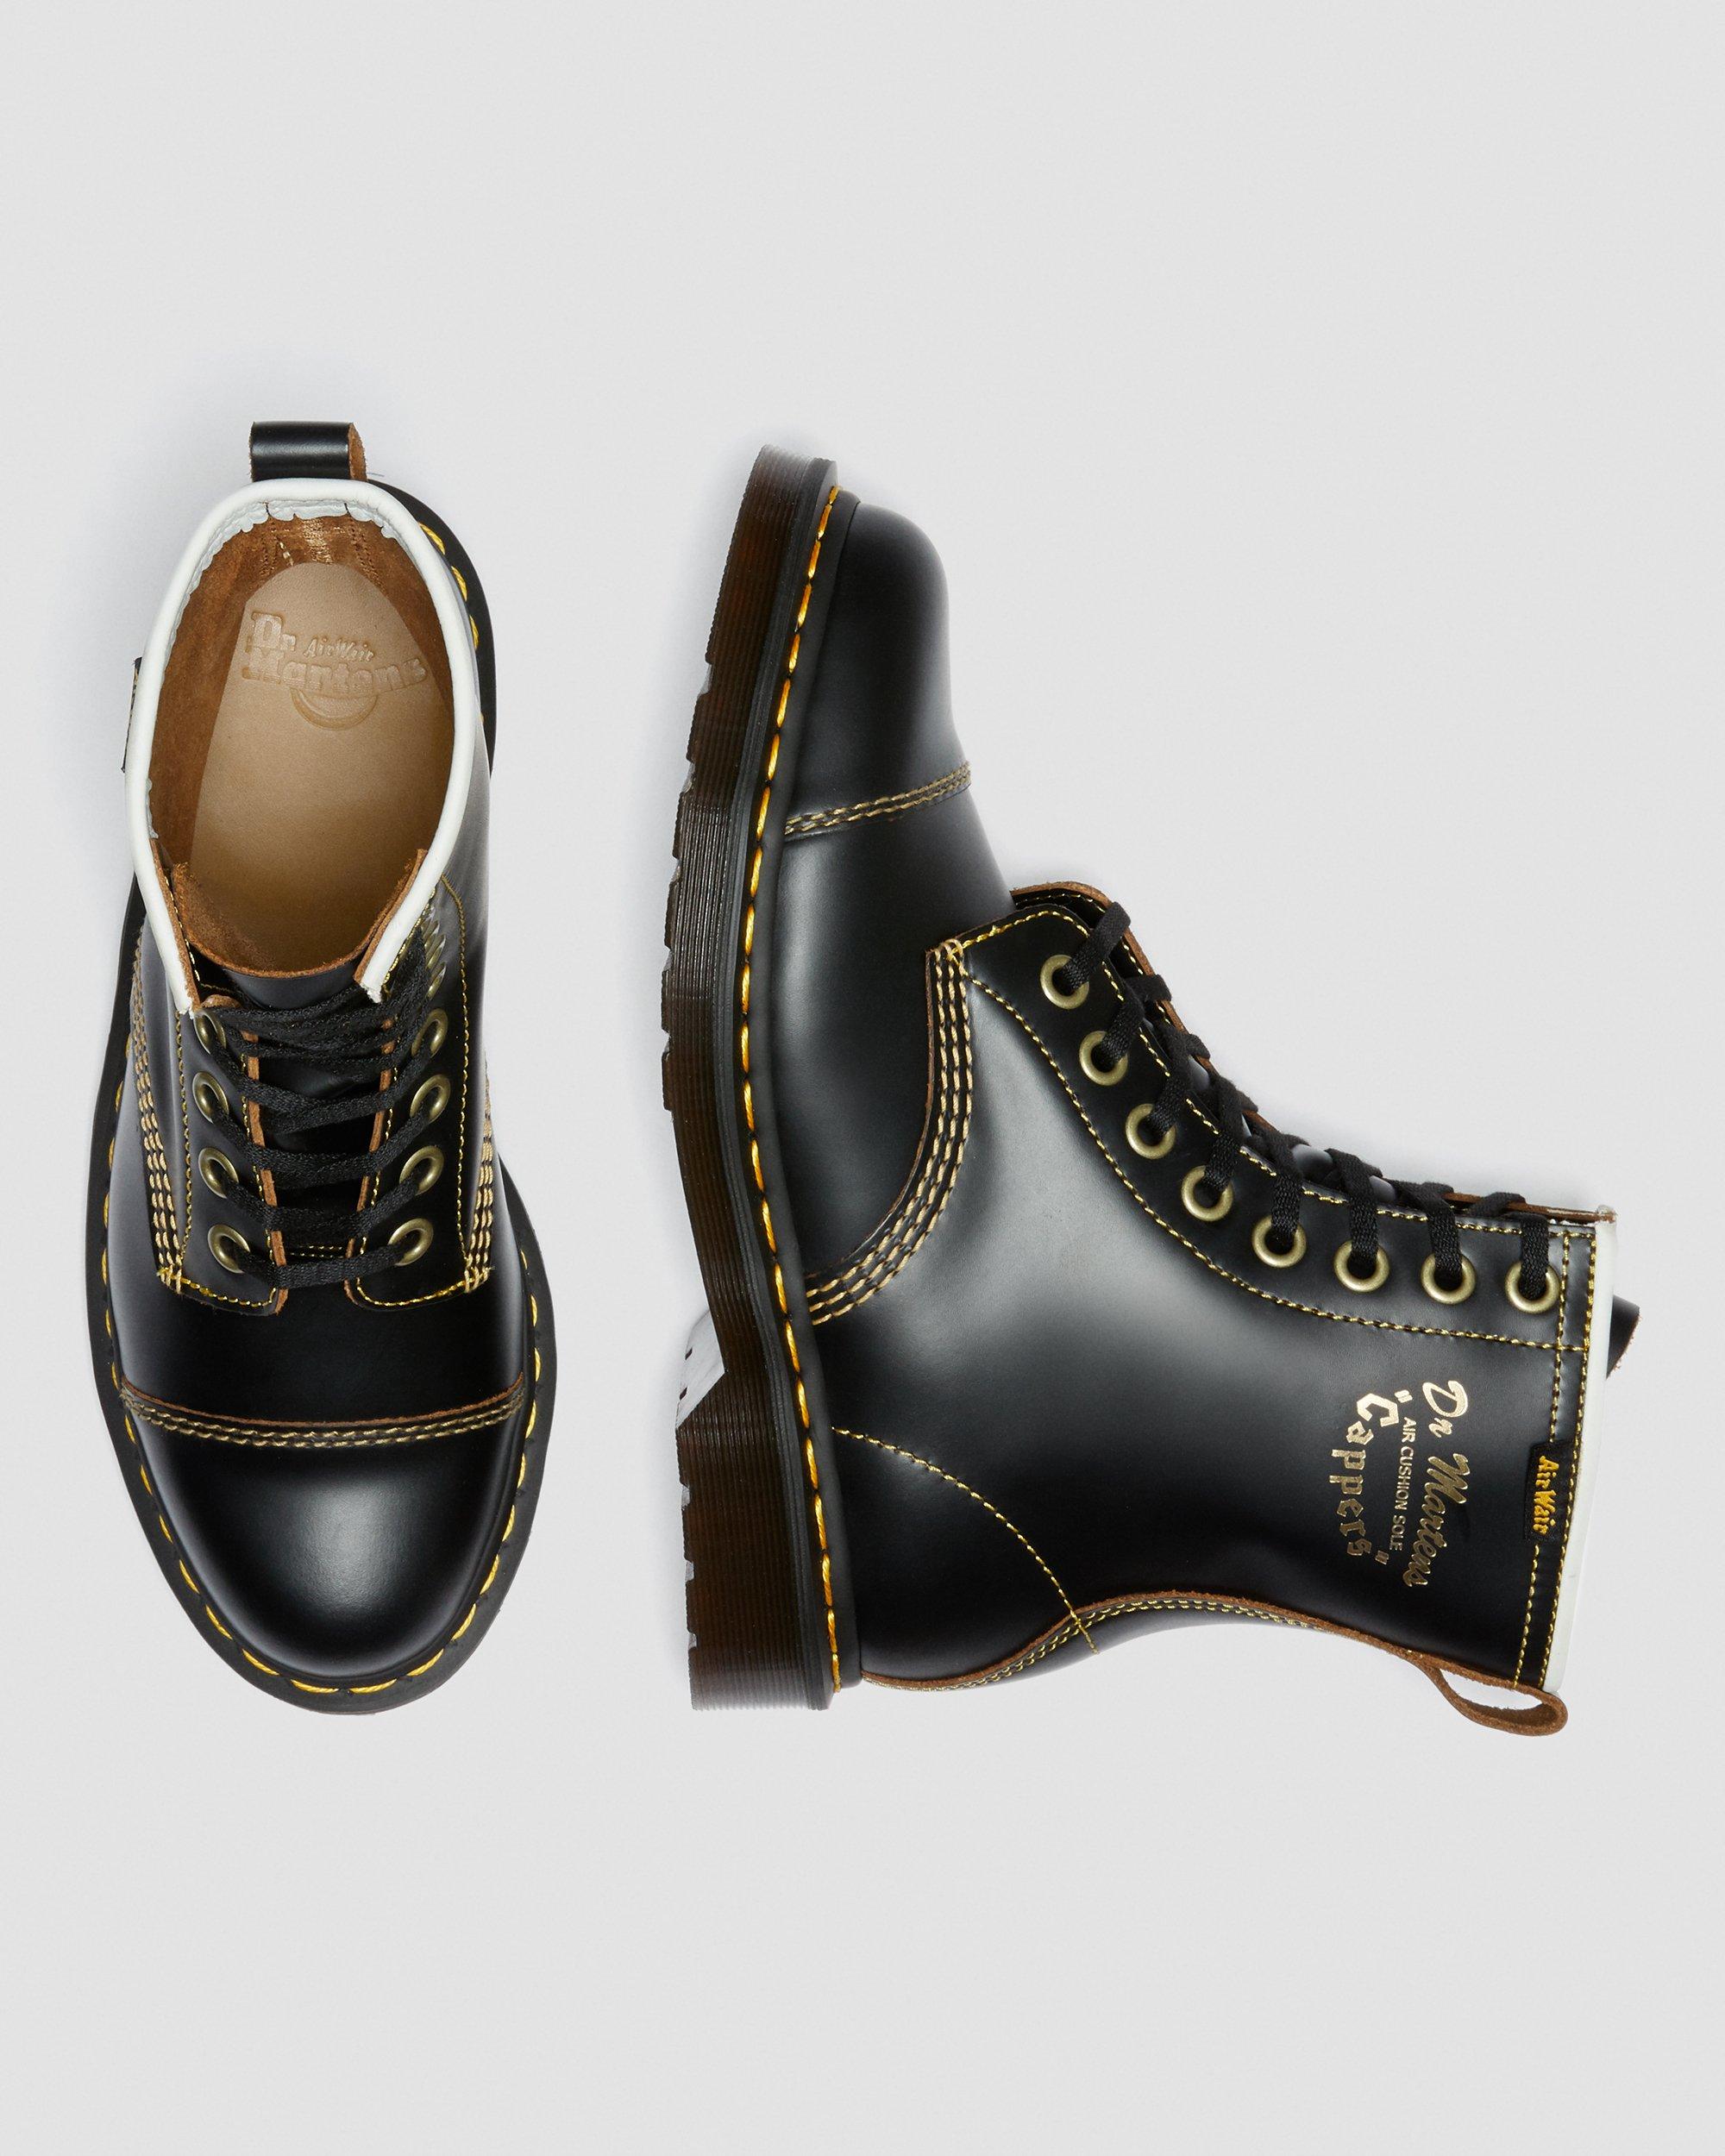 https://i1.adis.ws/i/drmartens/16058001.87.jpg?$large$Capper Vintage Smooth Leather Boots Dr. Martens